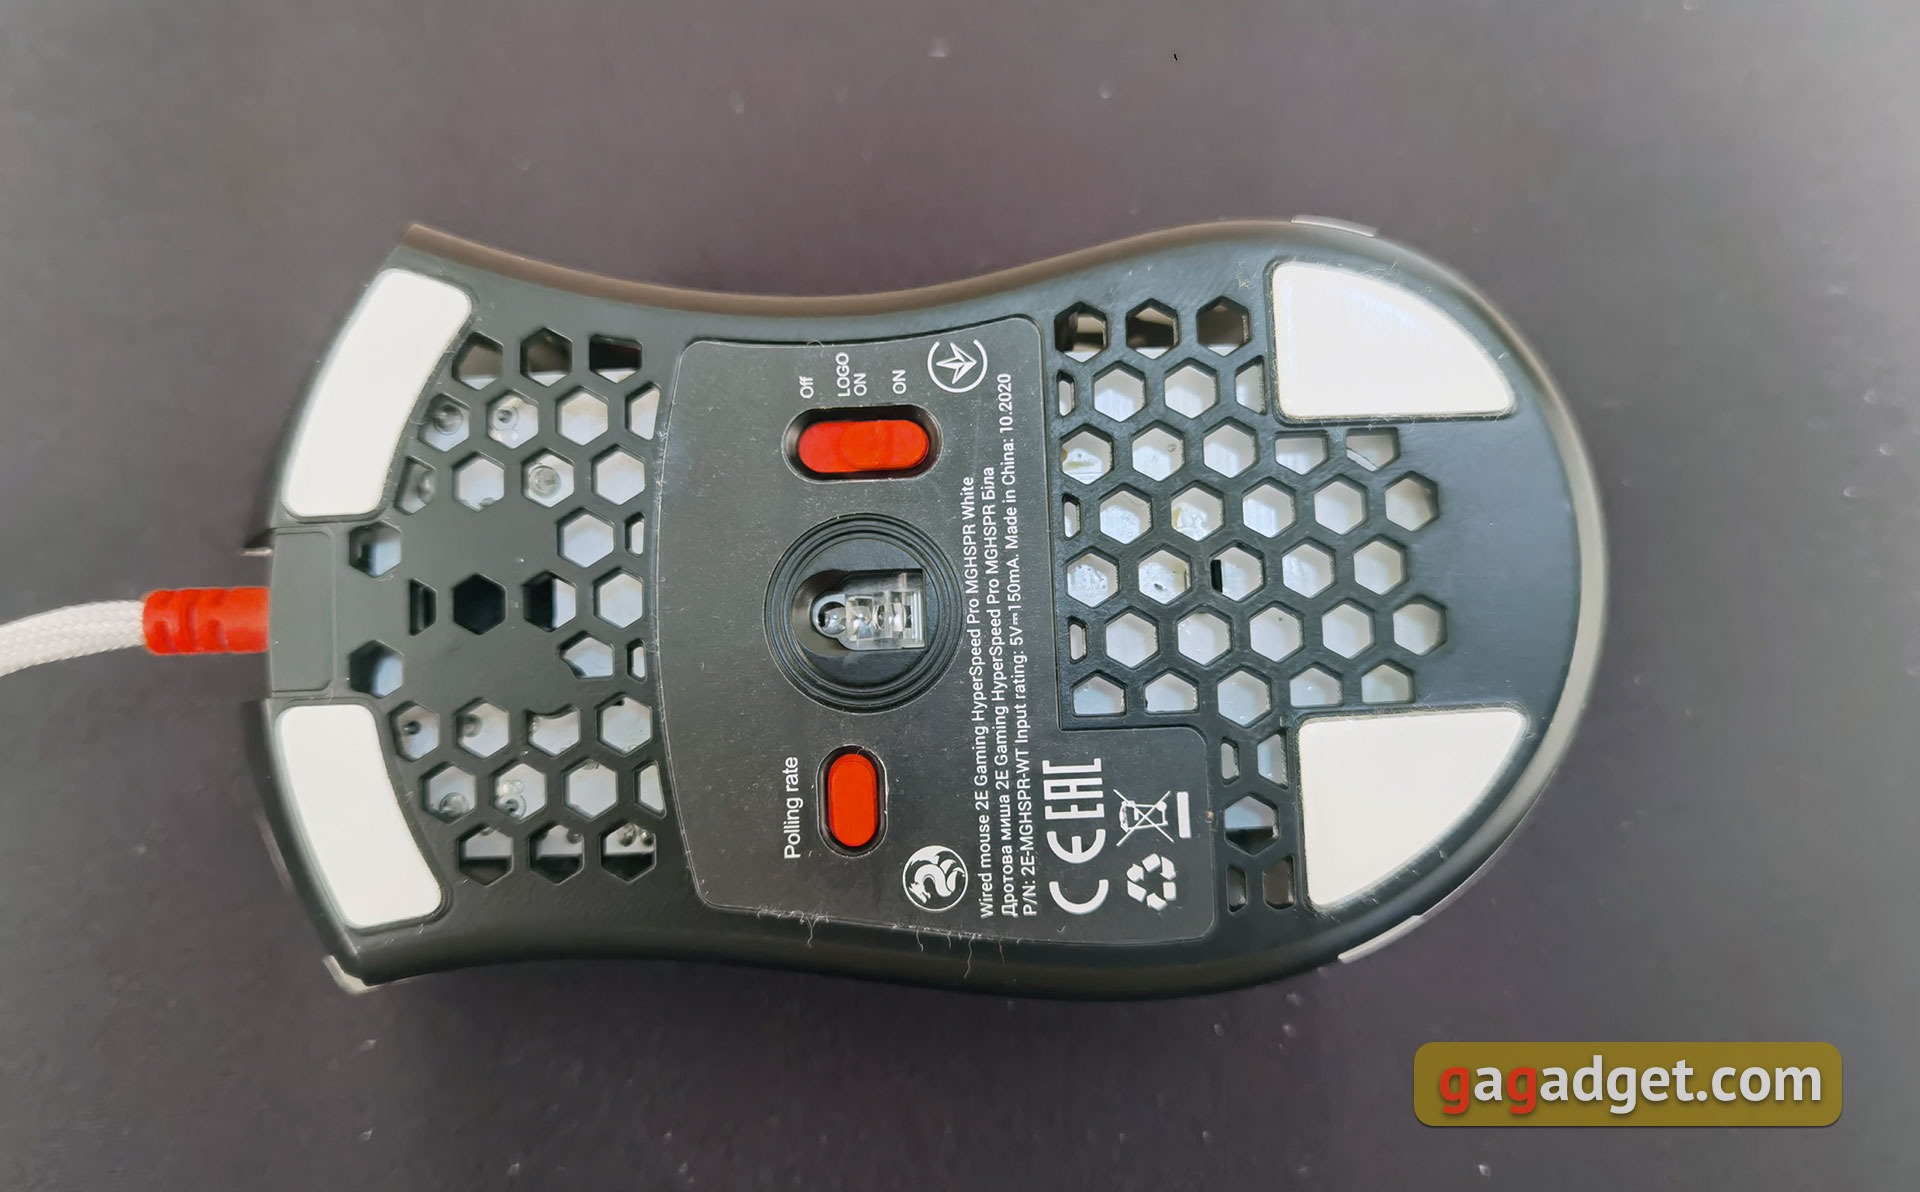 2E Gaming HyperSpeed Pro - przegląd: Lekka mysz do gier z doskonałym sensorem-14